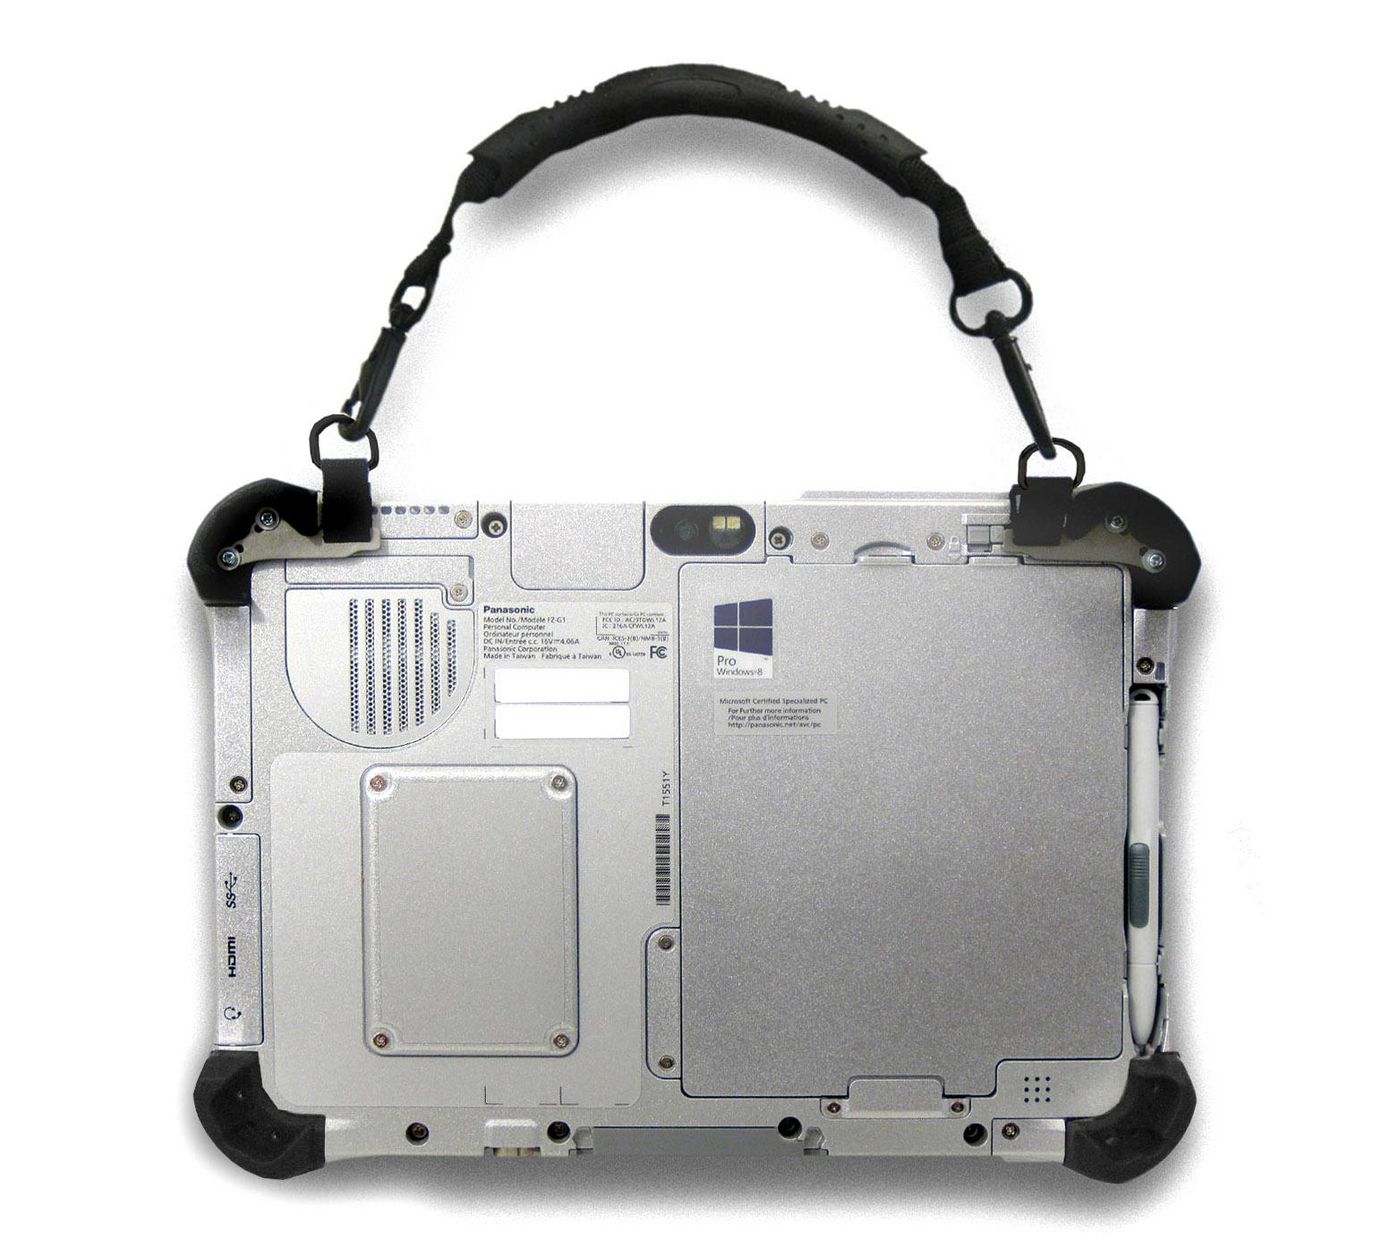 Panasonic PCPE-INFG1B1 Mobility bundle Removable 